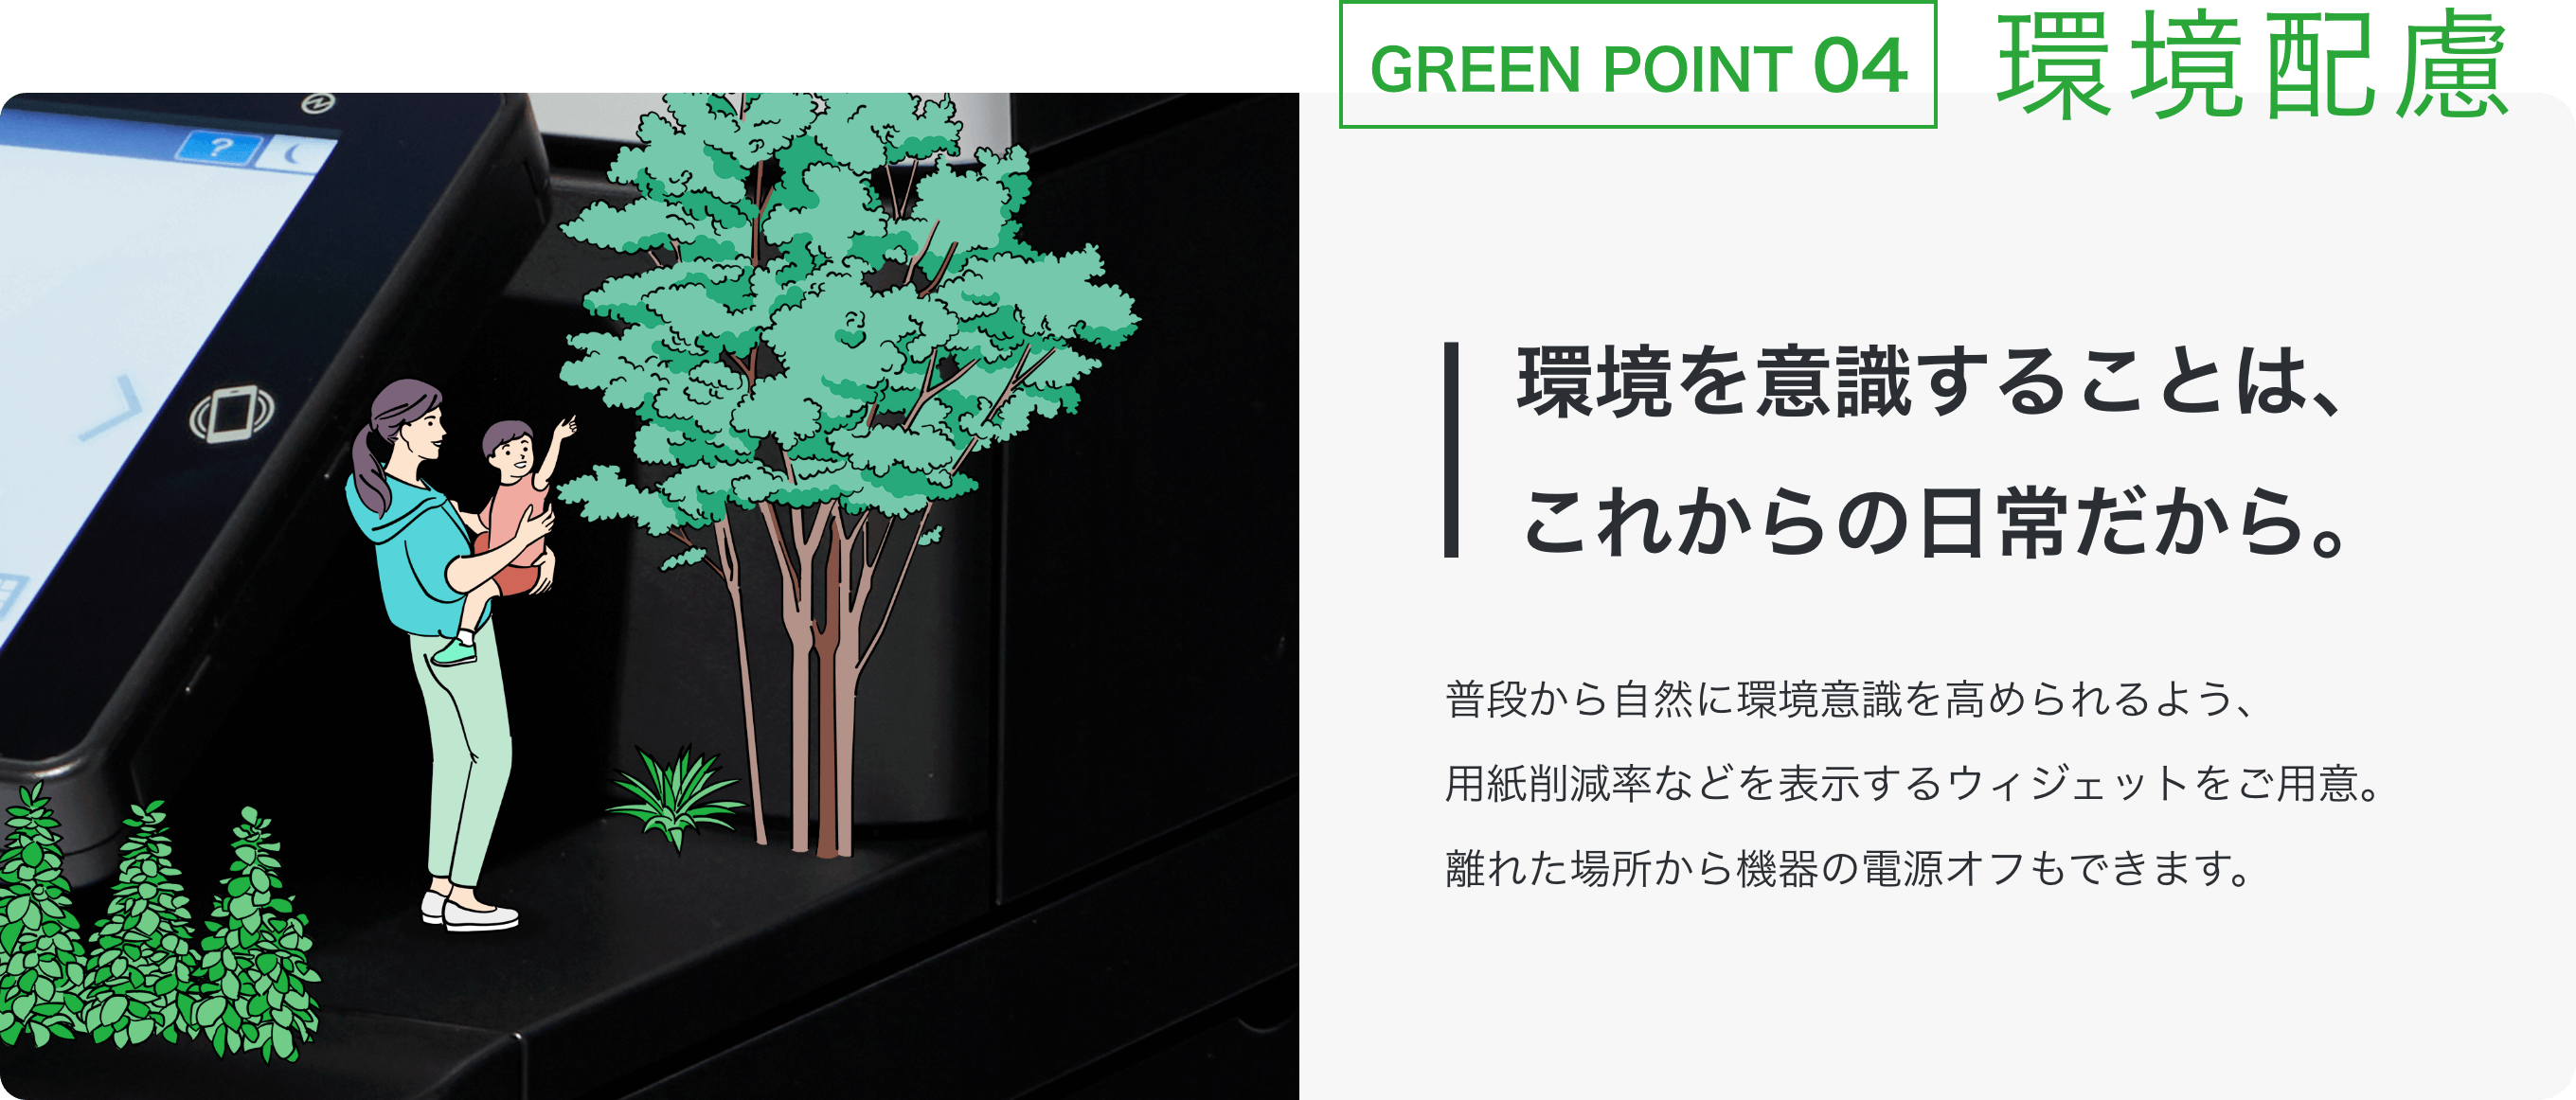 GREEN POINT 04 環境配慮 環境を意識することは、これからの日常だから。 普段から自然に環境意識を高められるよう、用紙削減率などを表示するウィジェットをご用意。離れた場所から機器の電源オフもできます。